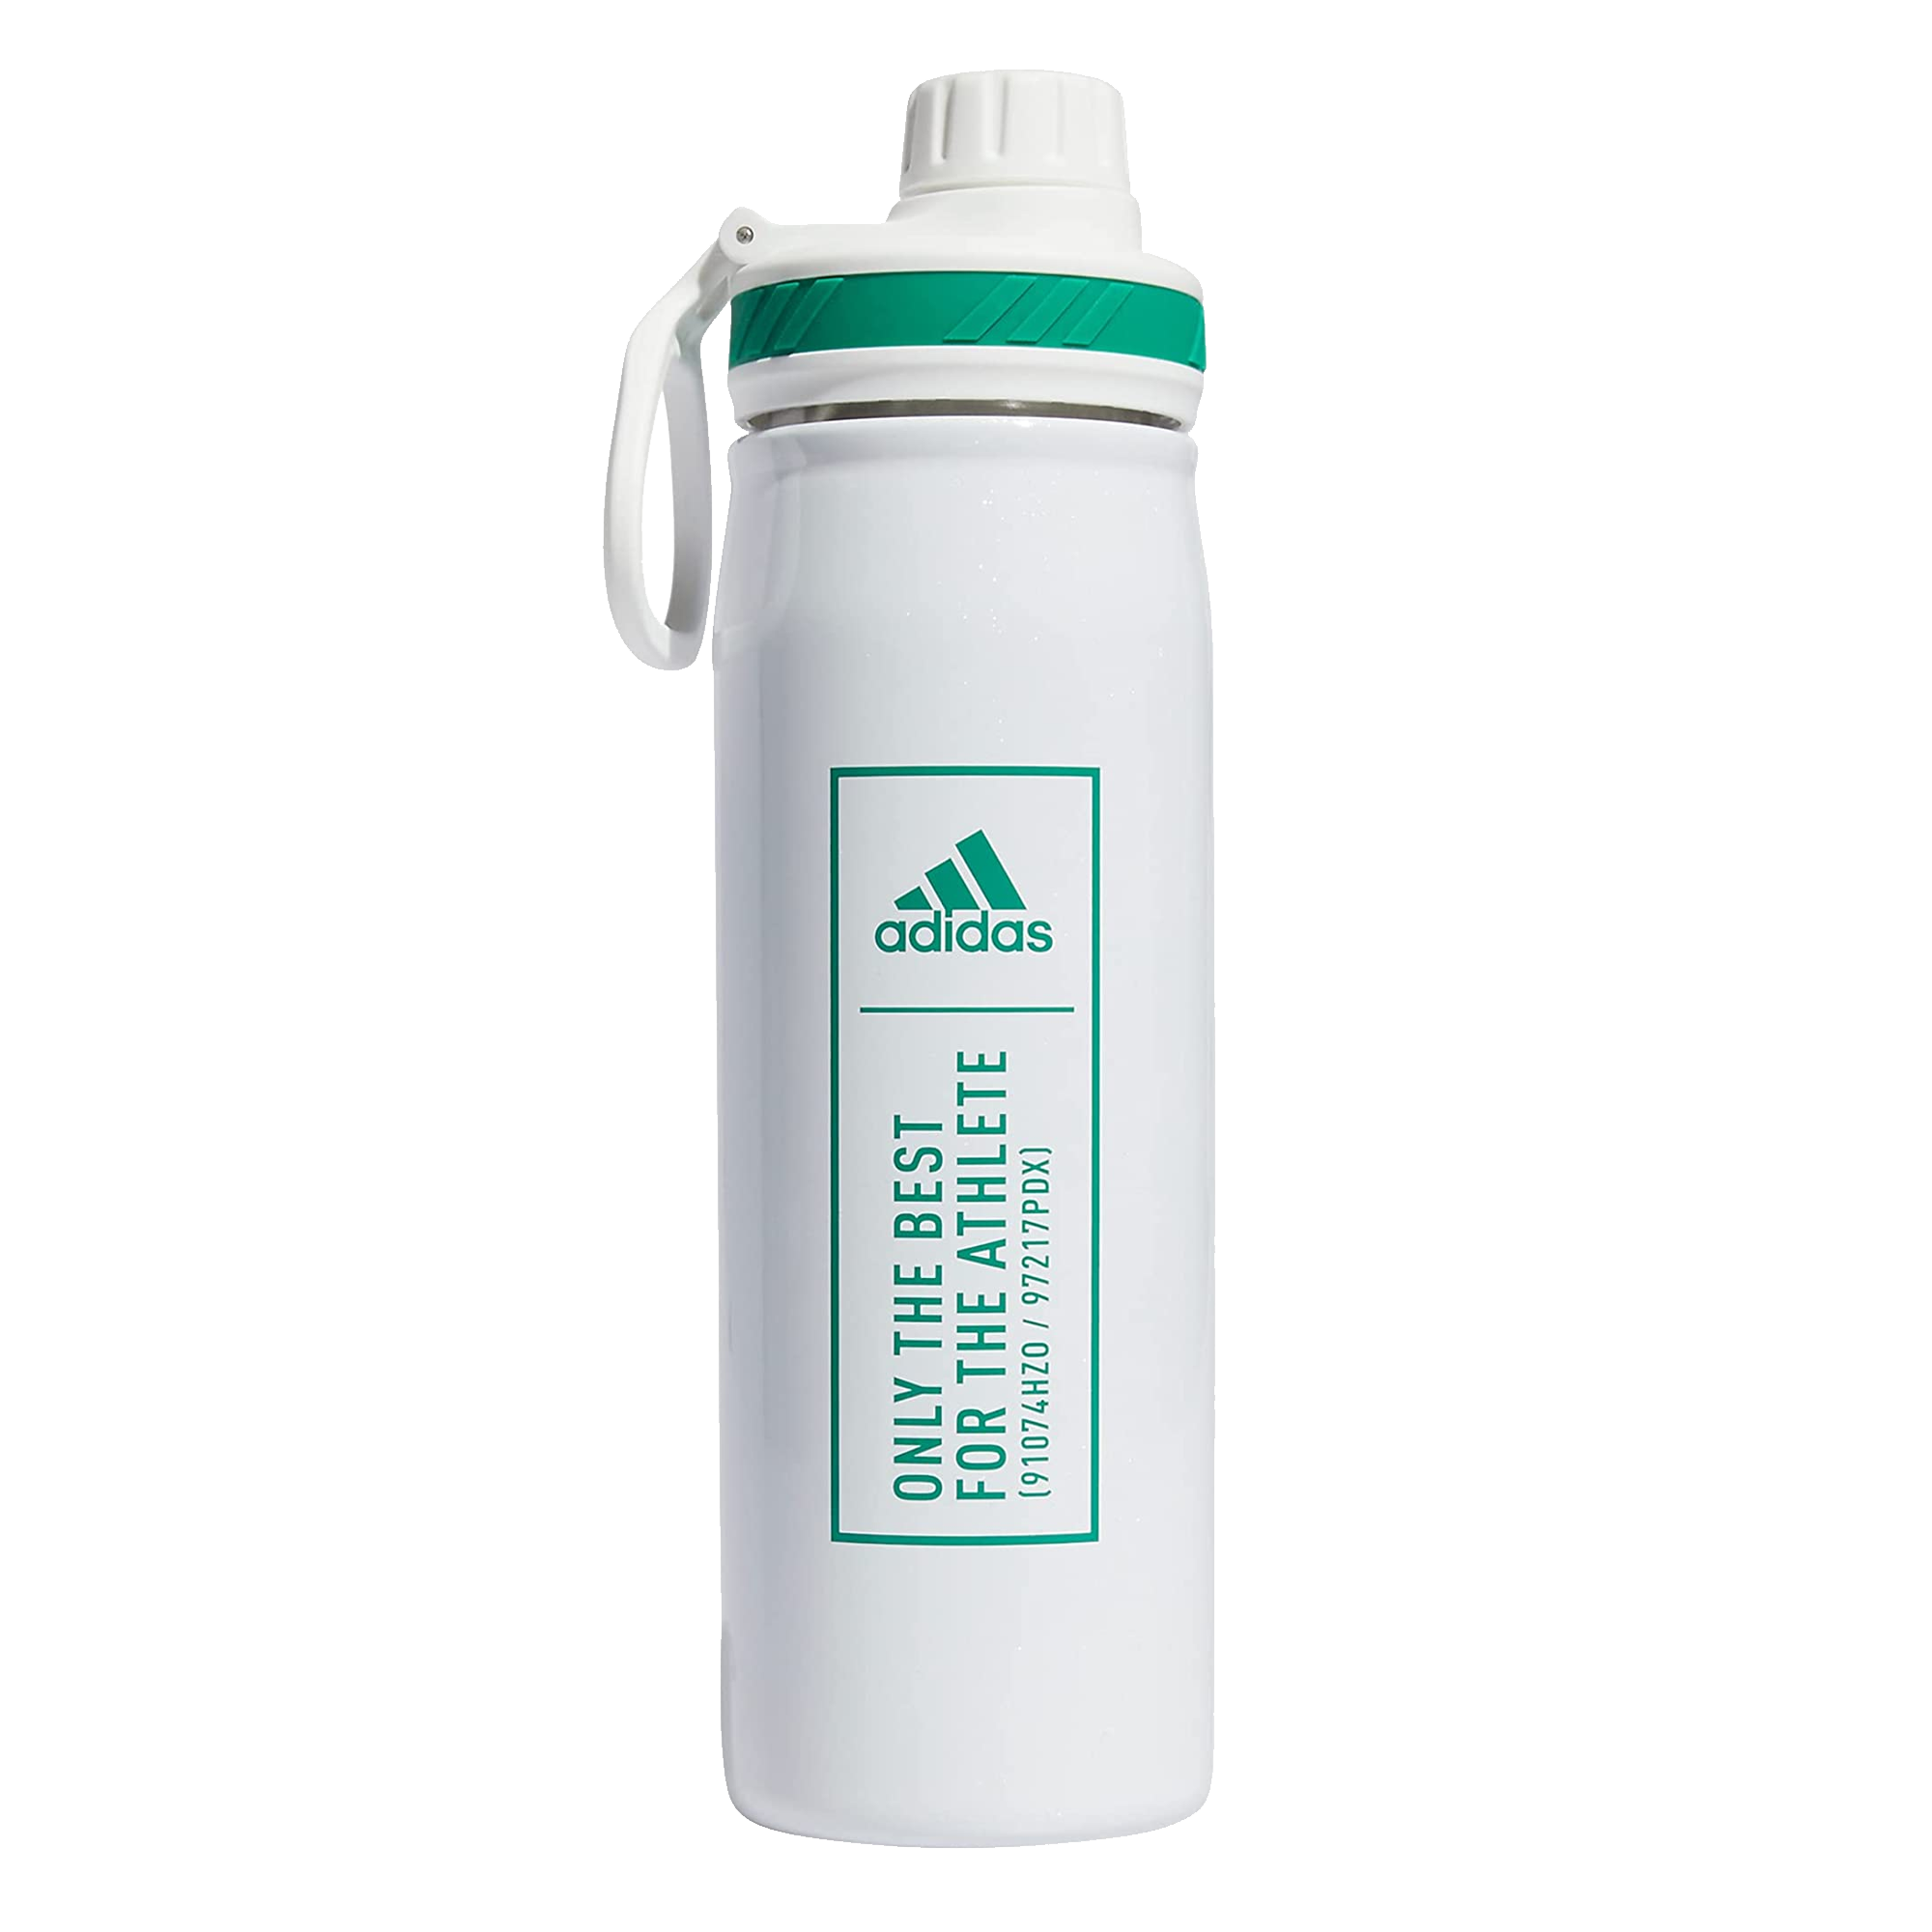 https://stefanssoccer.com/mm5/graphics/00000001/7/adidas-white-metal-water-bottle.png